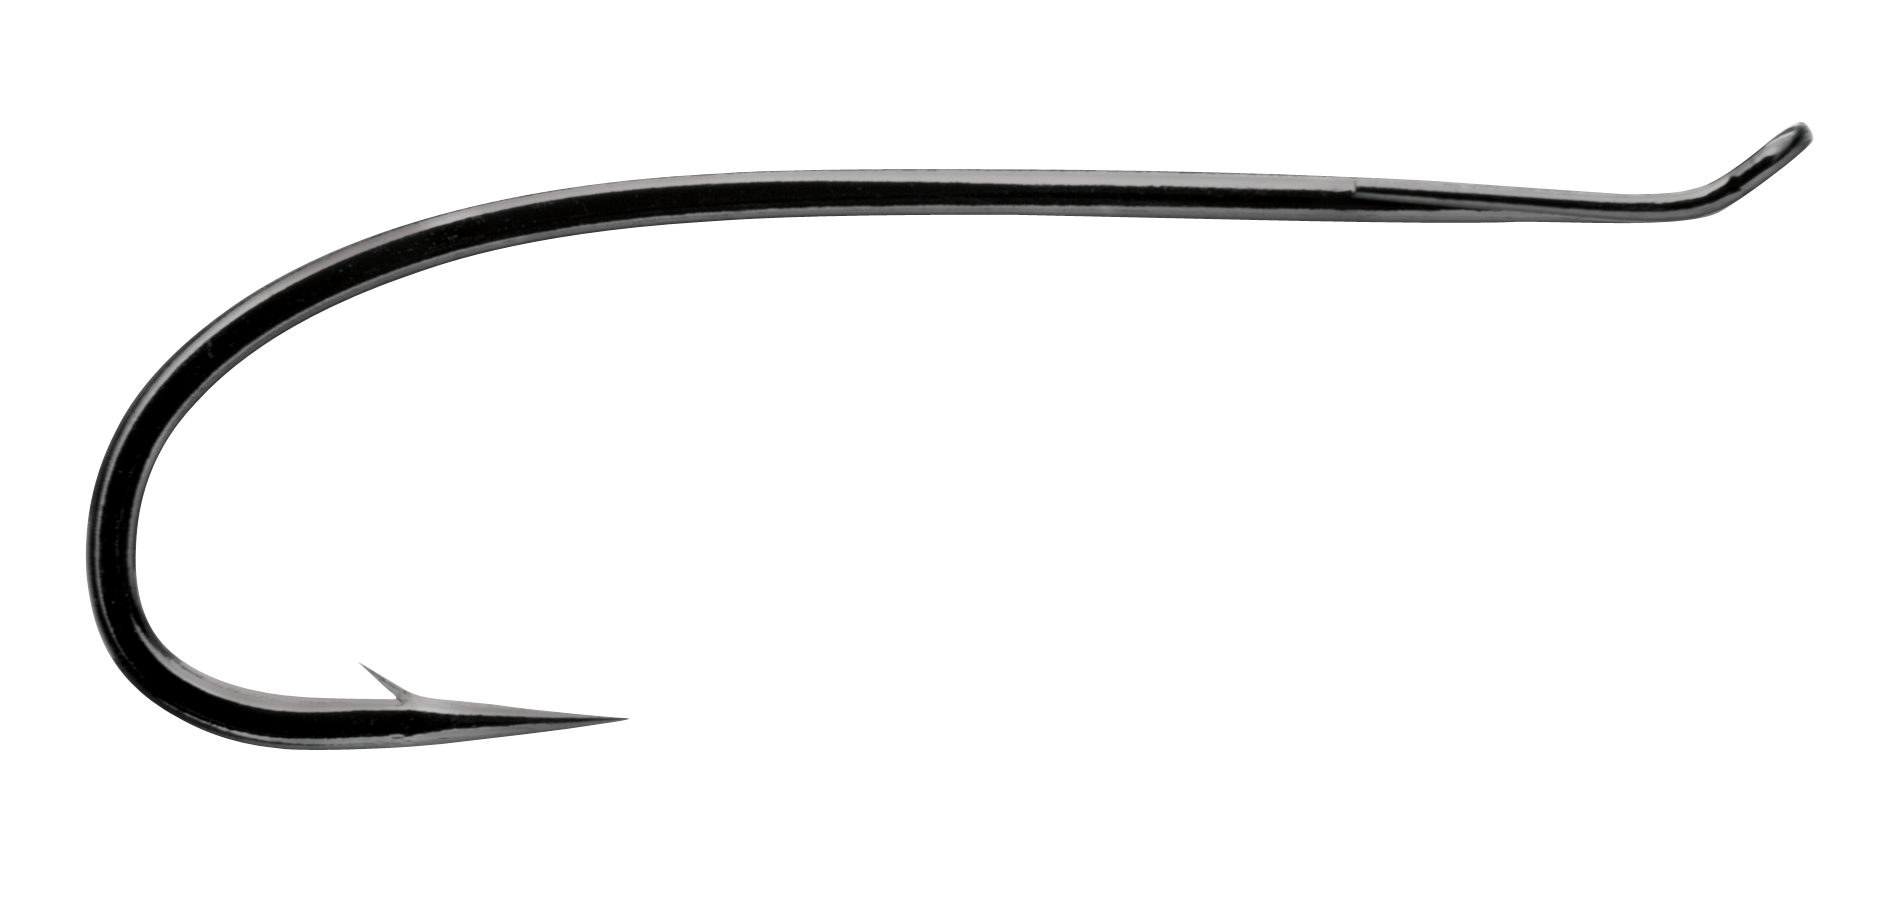 Gamakatsu Salmon/Steelhead Wet Fly Hook  T10-6H - #4 - Nickel Silver Black